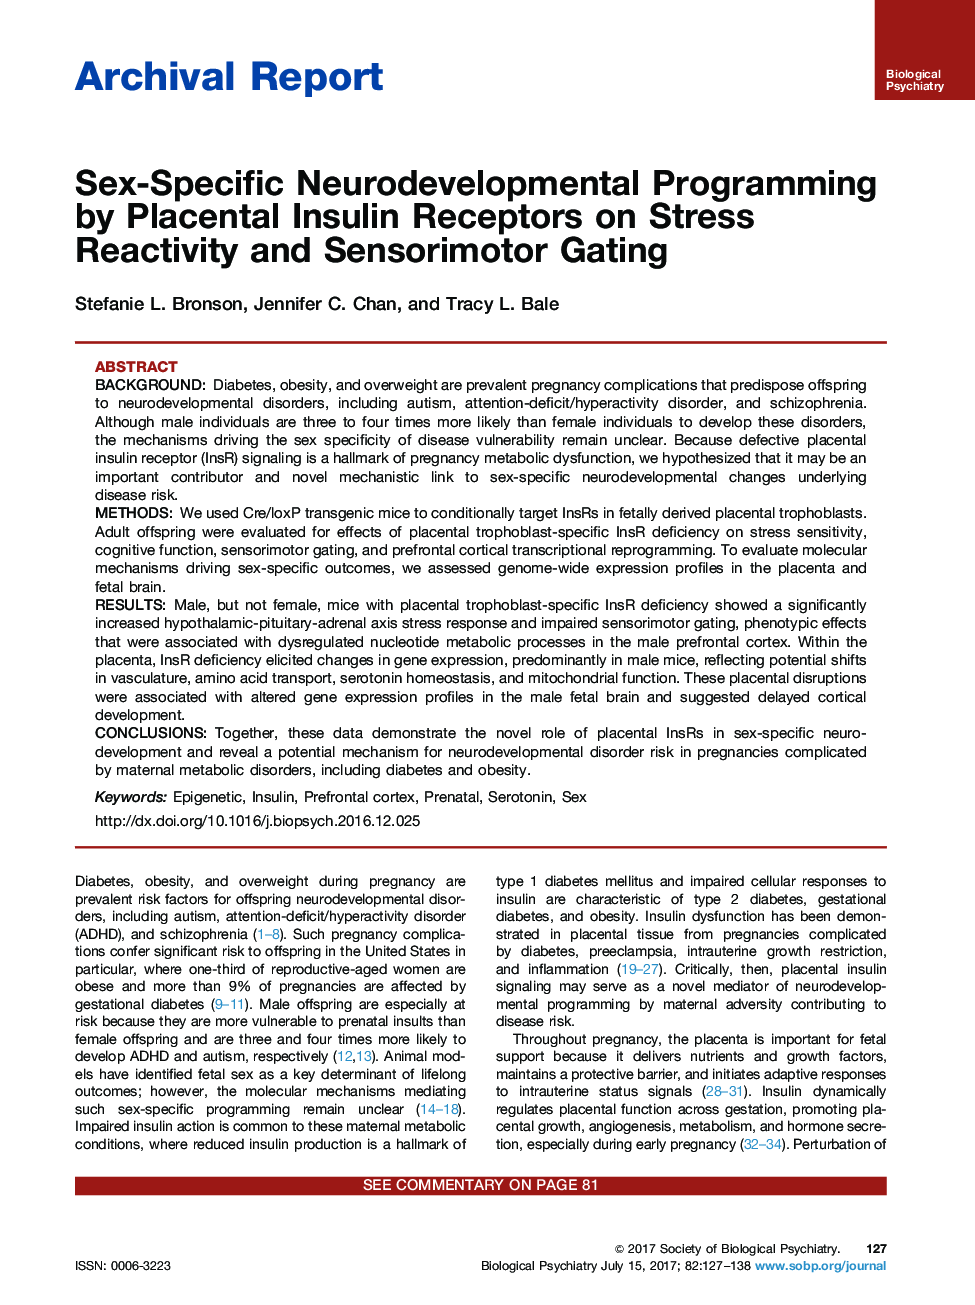 Archival ReportSex-Specific Neurodevelopmental Programming by Placental Insulin Receptors on Stress Reactivity and Sensorimotor Gating